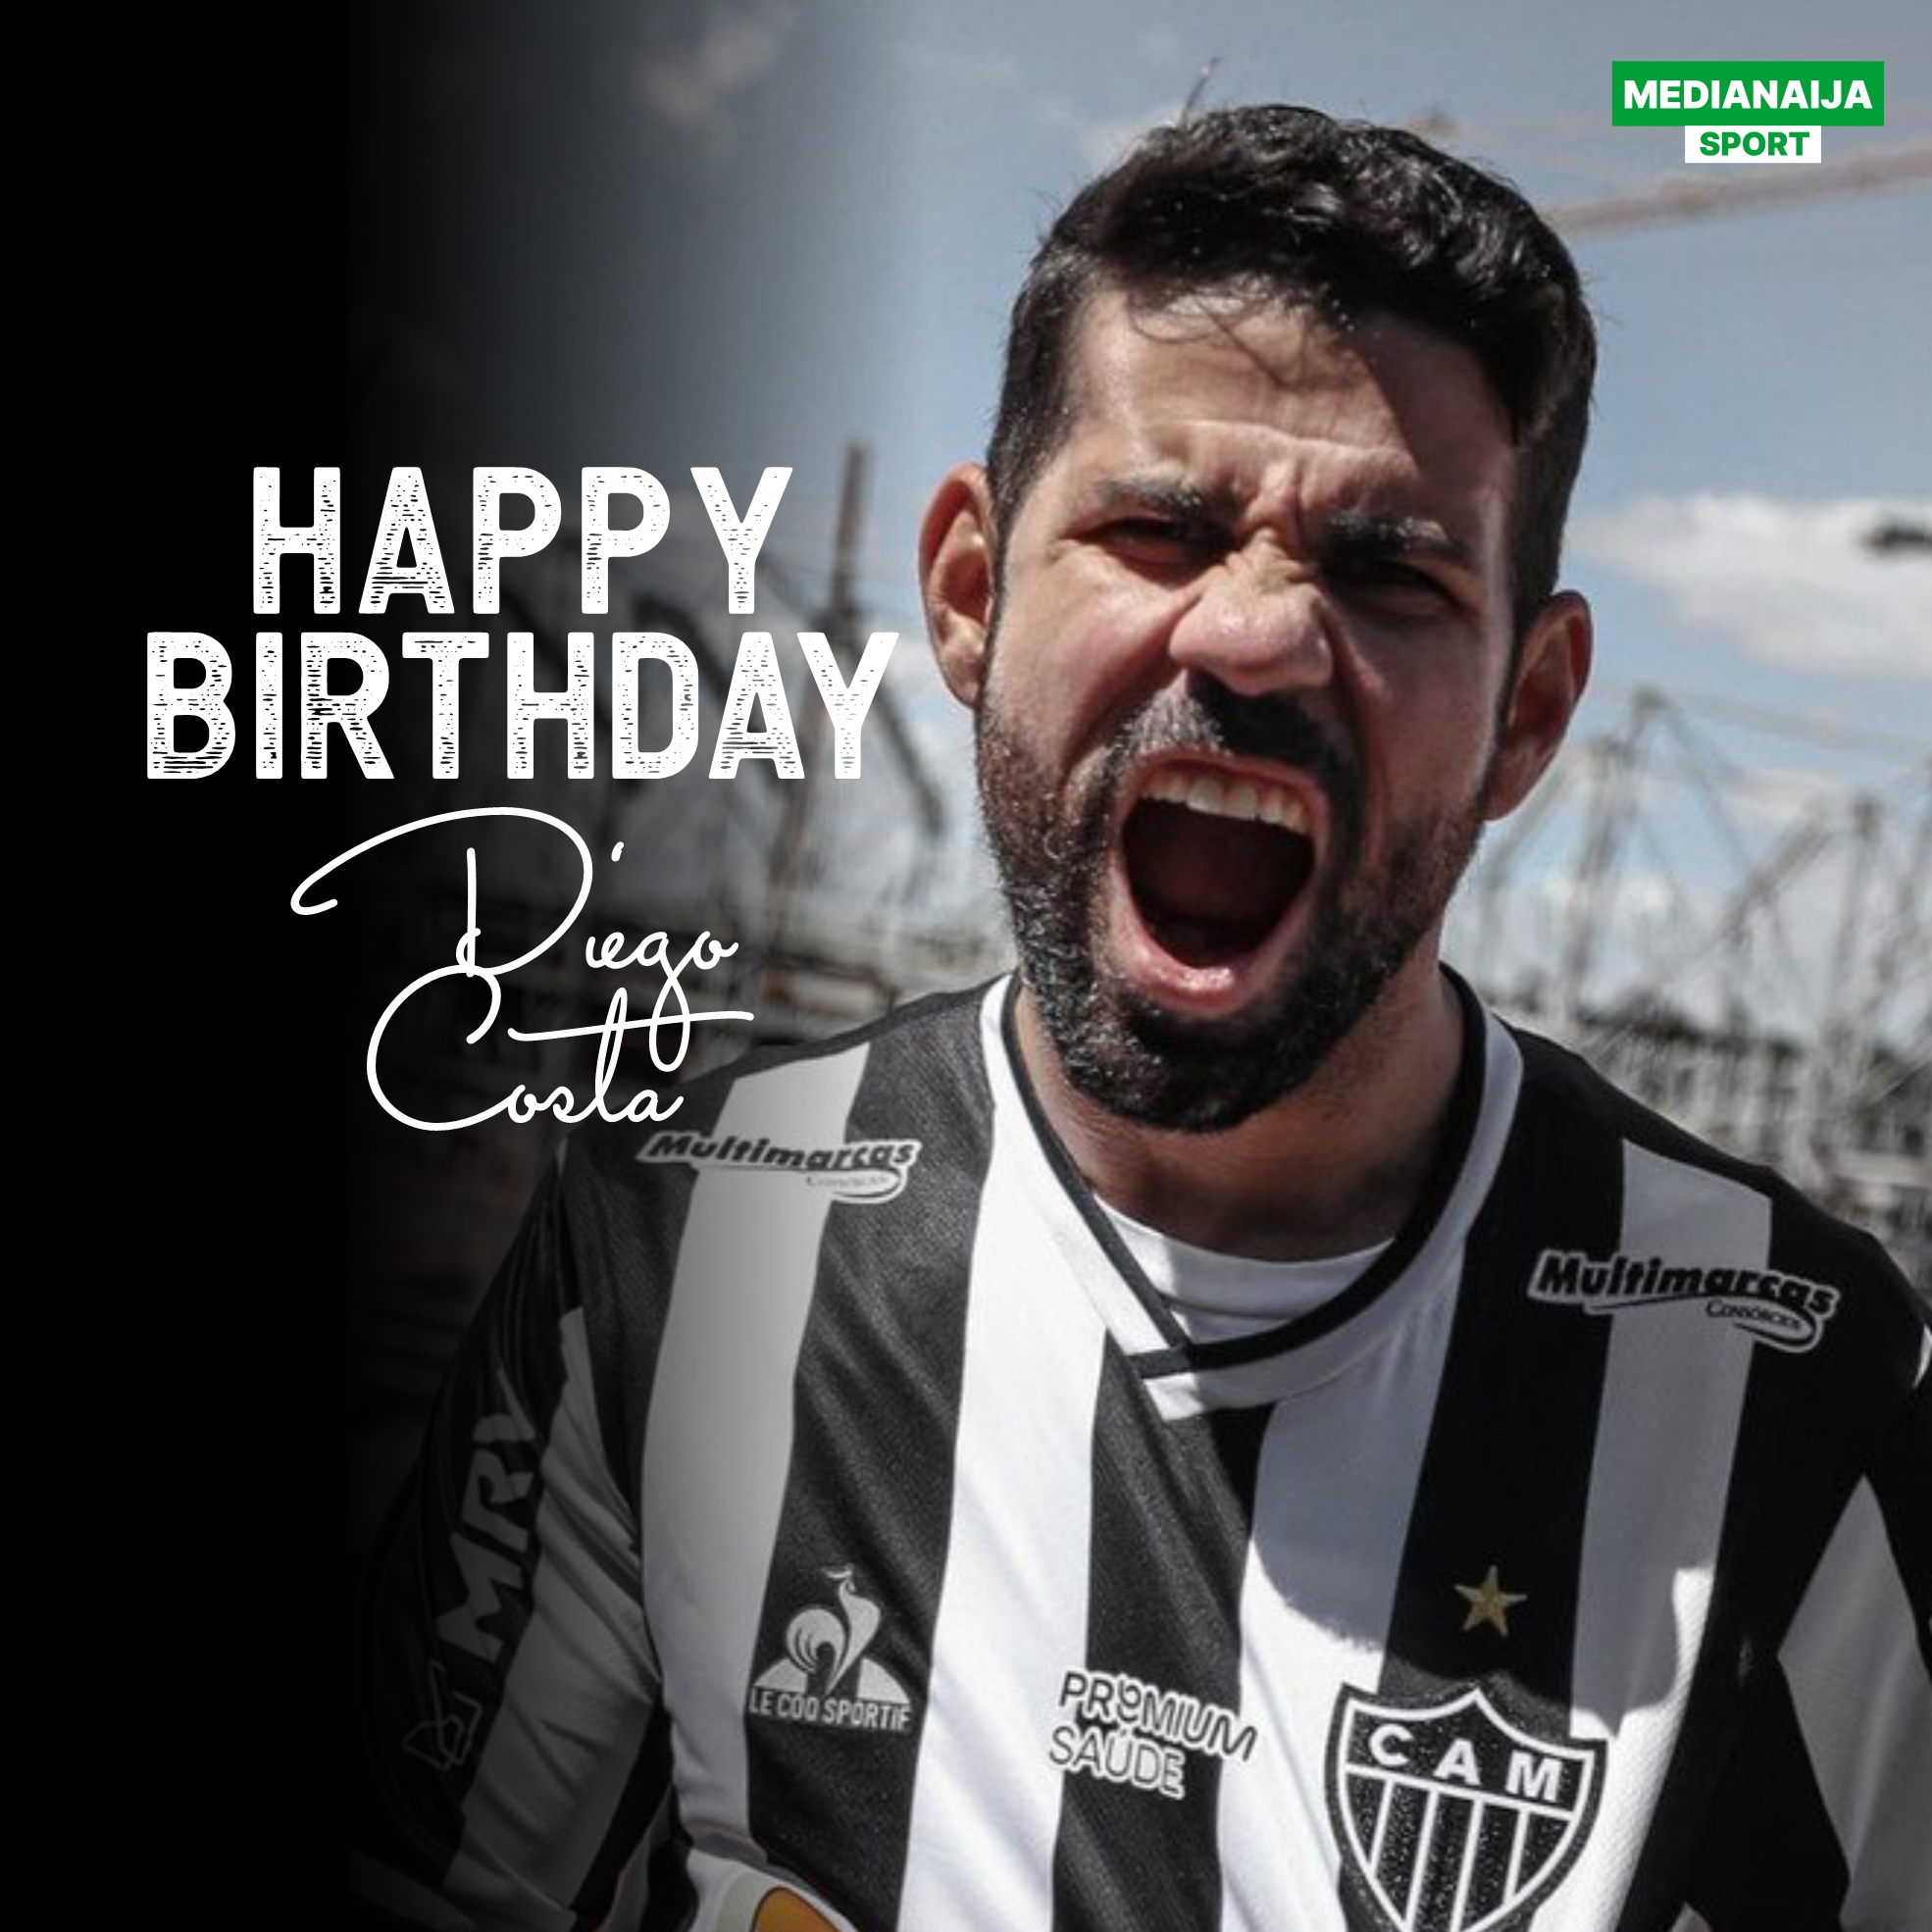 Happy Birthday to Diego Costa! 